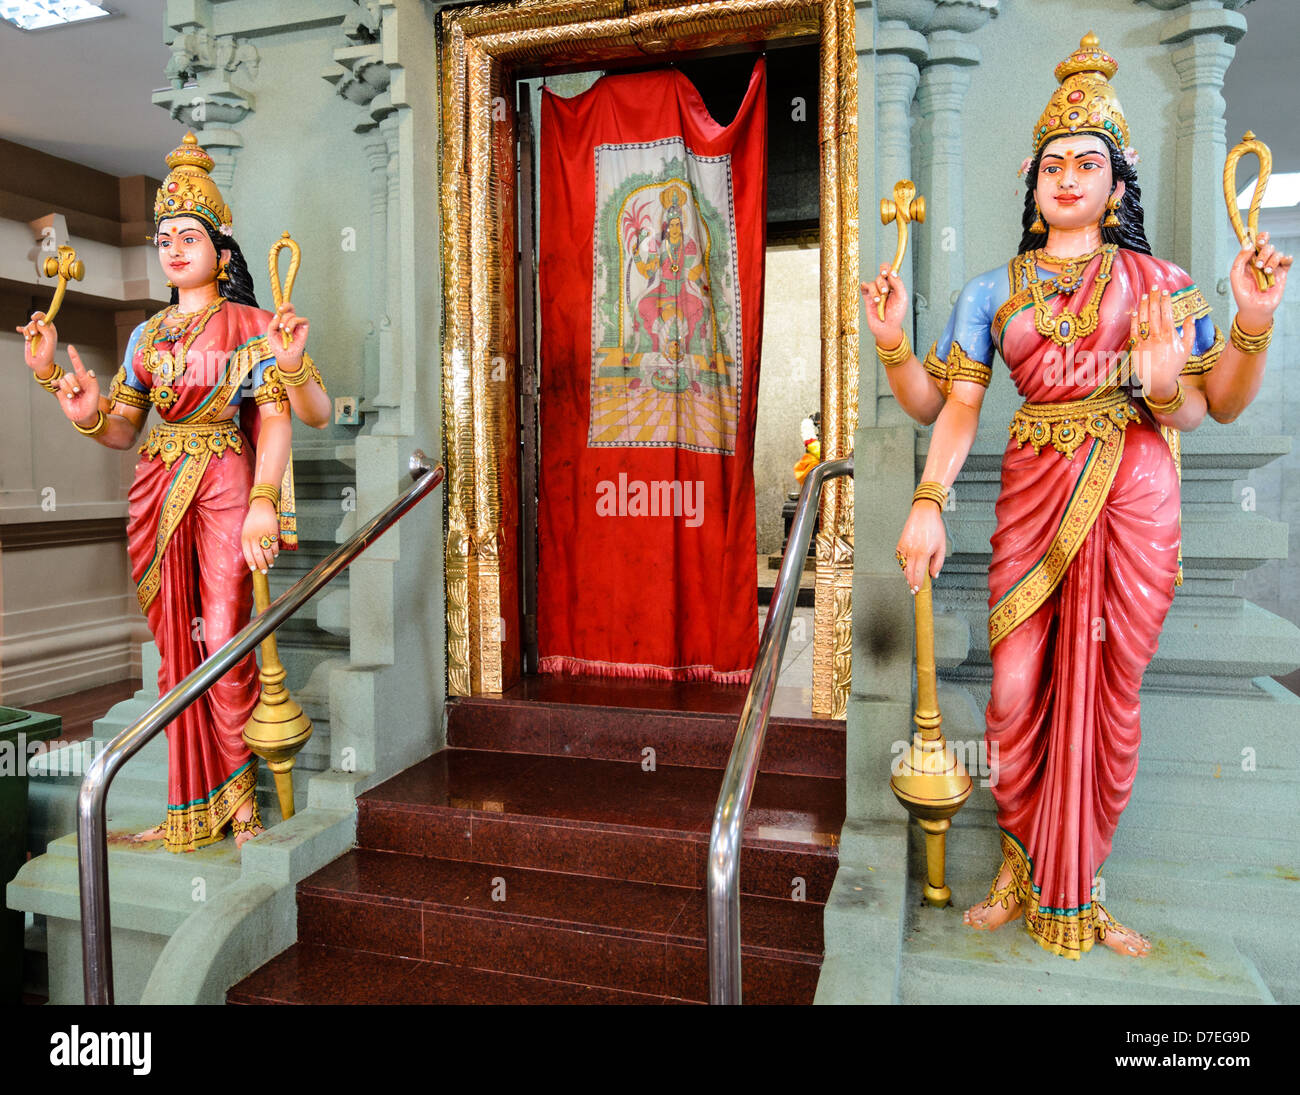 Four-armed deities guard the inner sanctum of a Hindu temple. Stock Photo